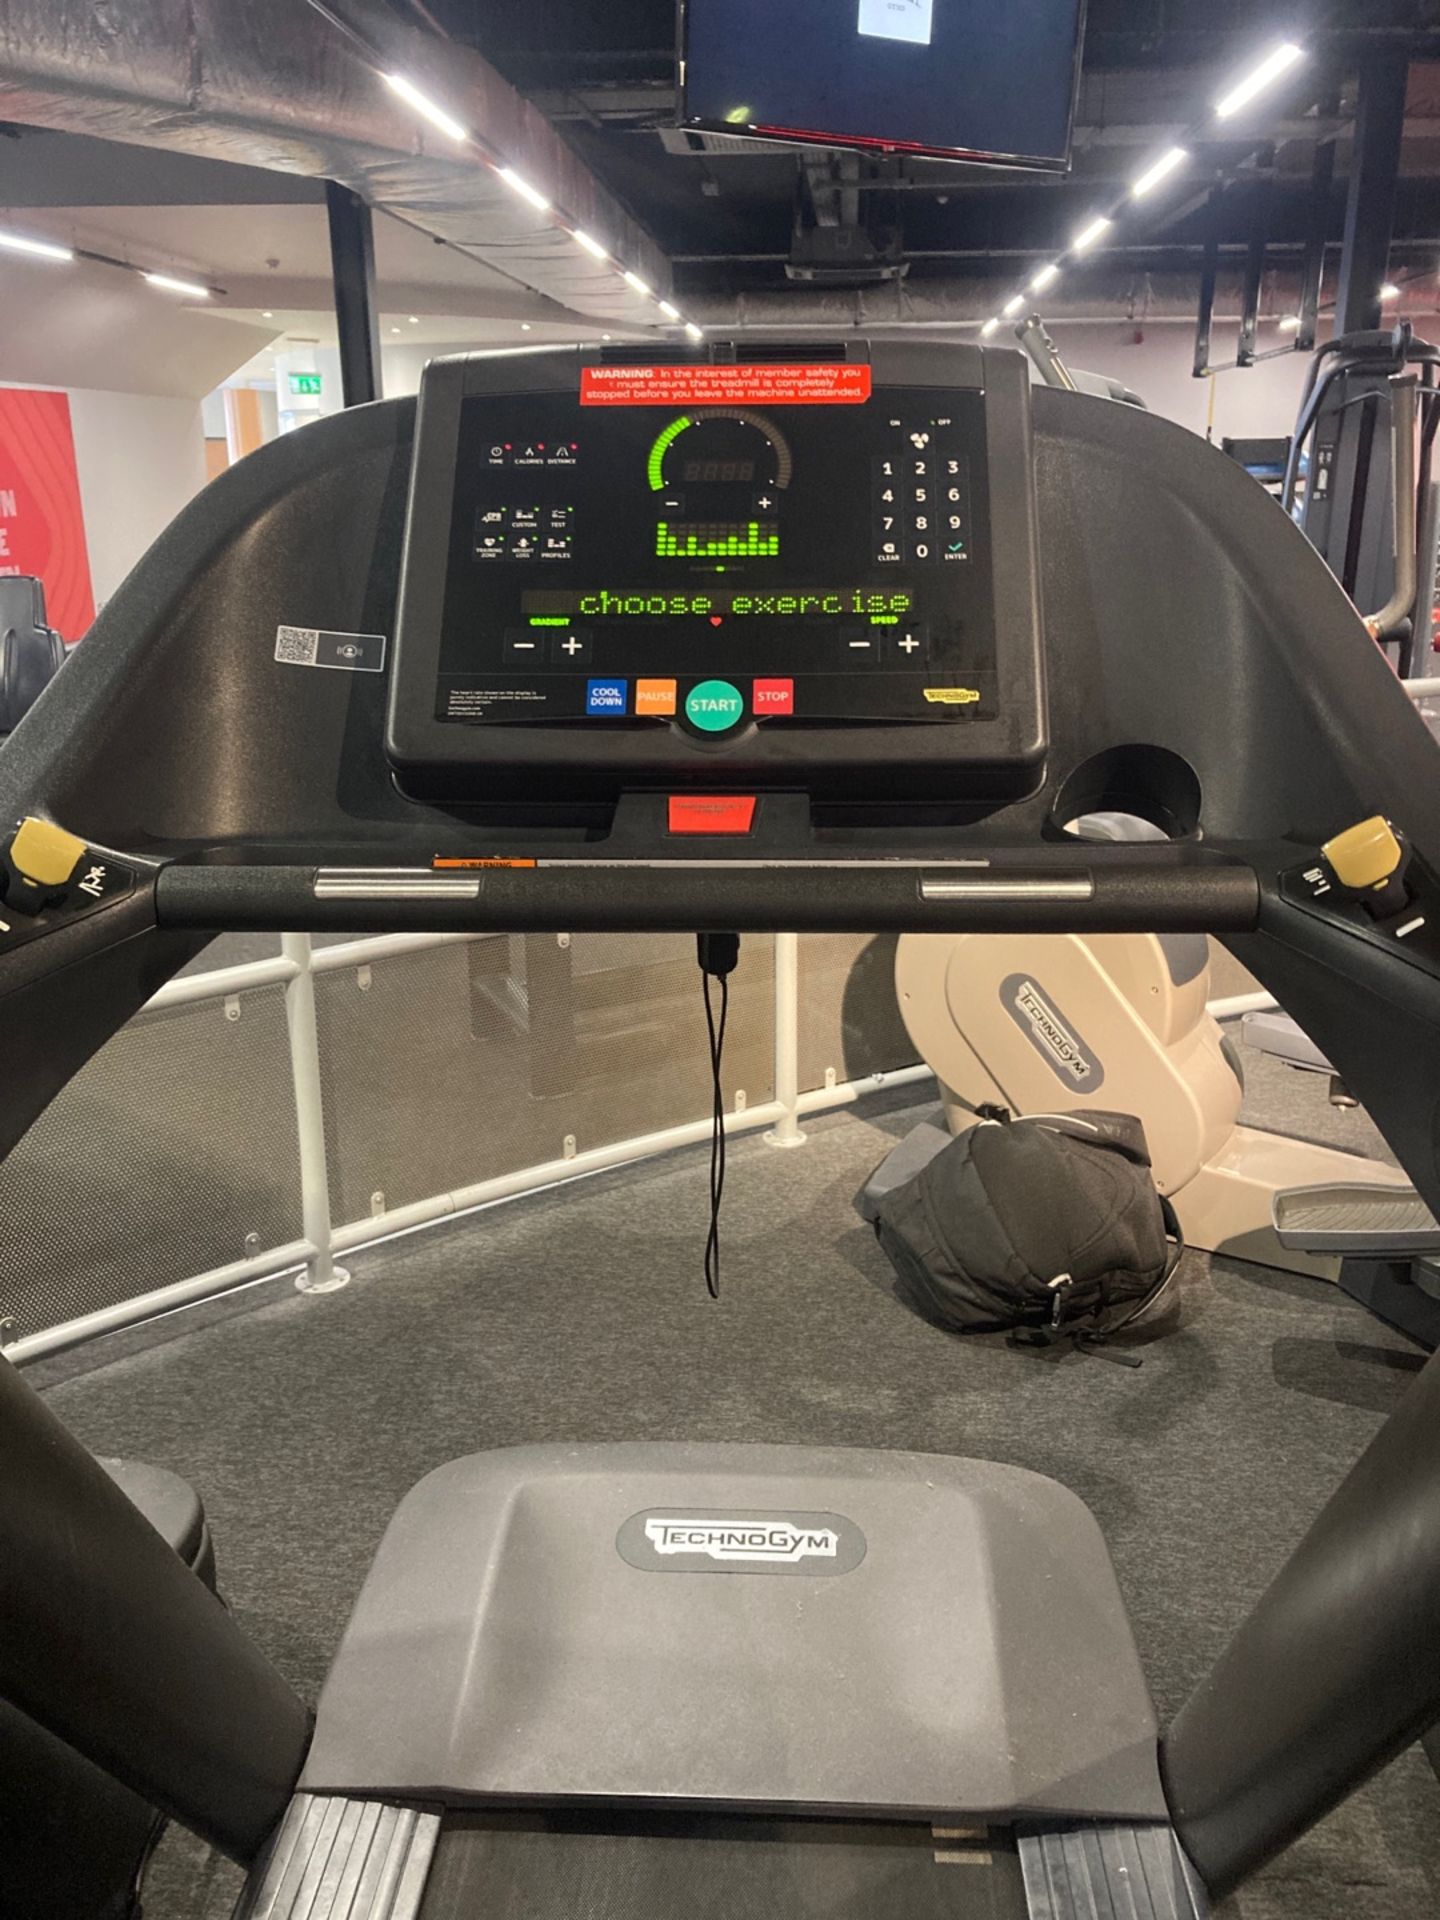 Technogym 1000 Treadmill - Image 2 of 5